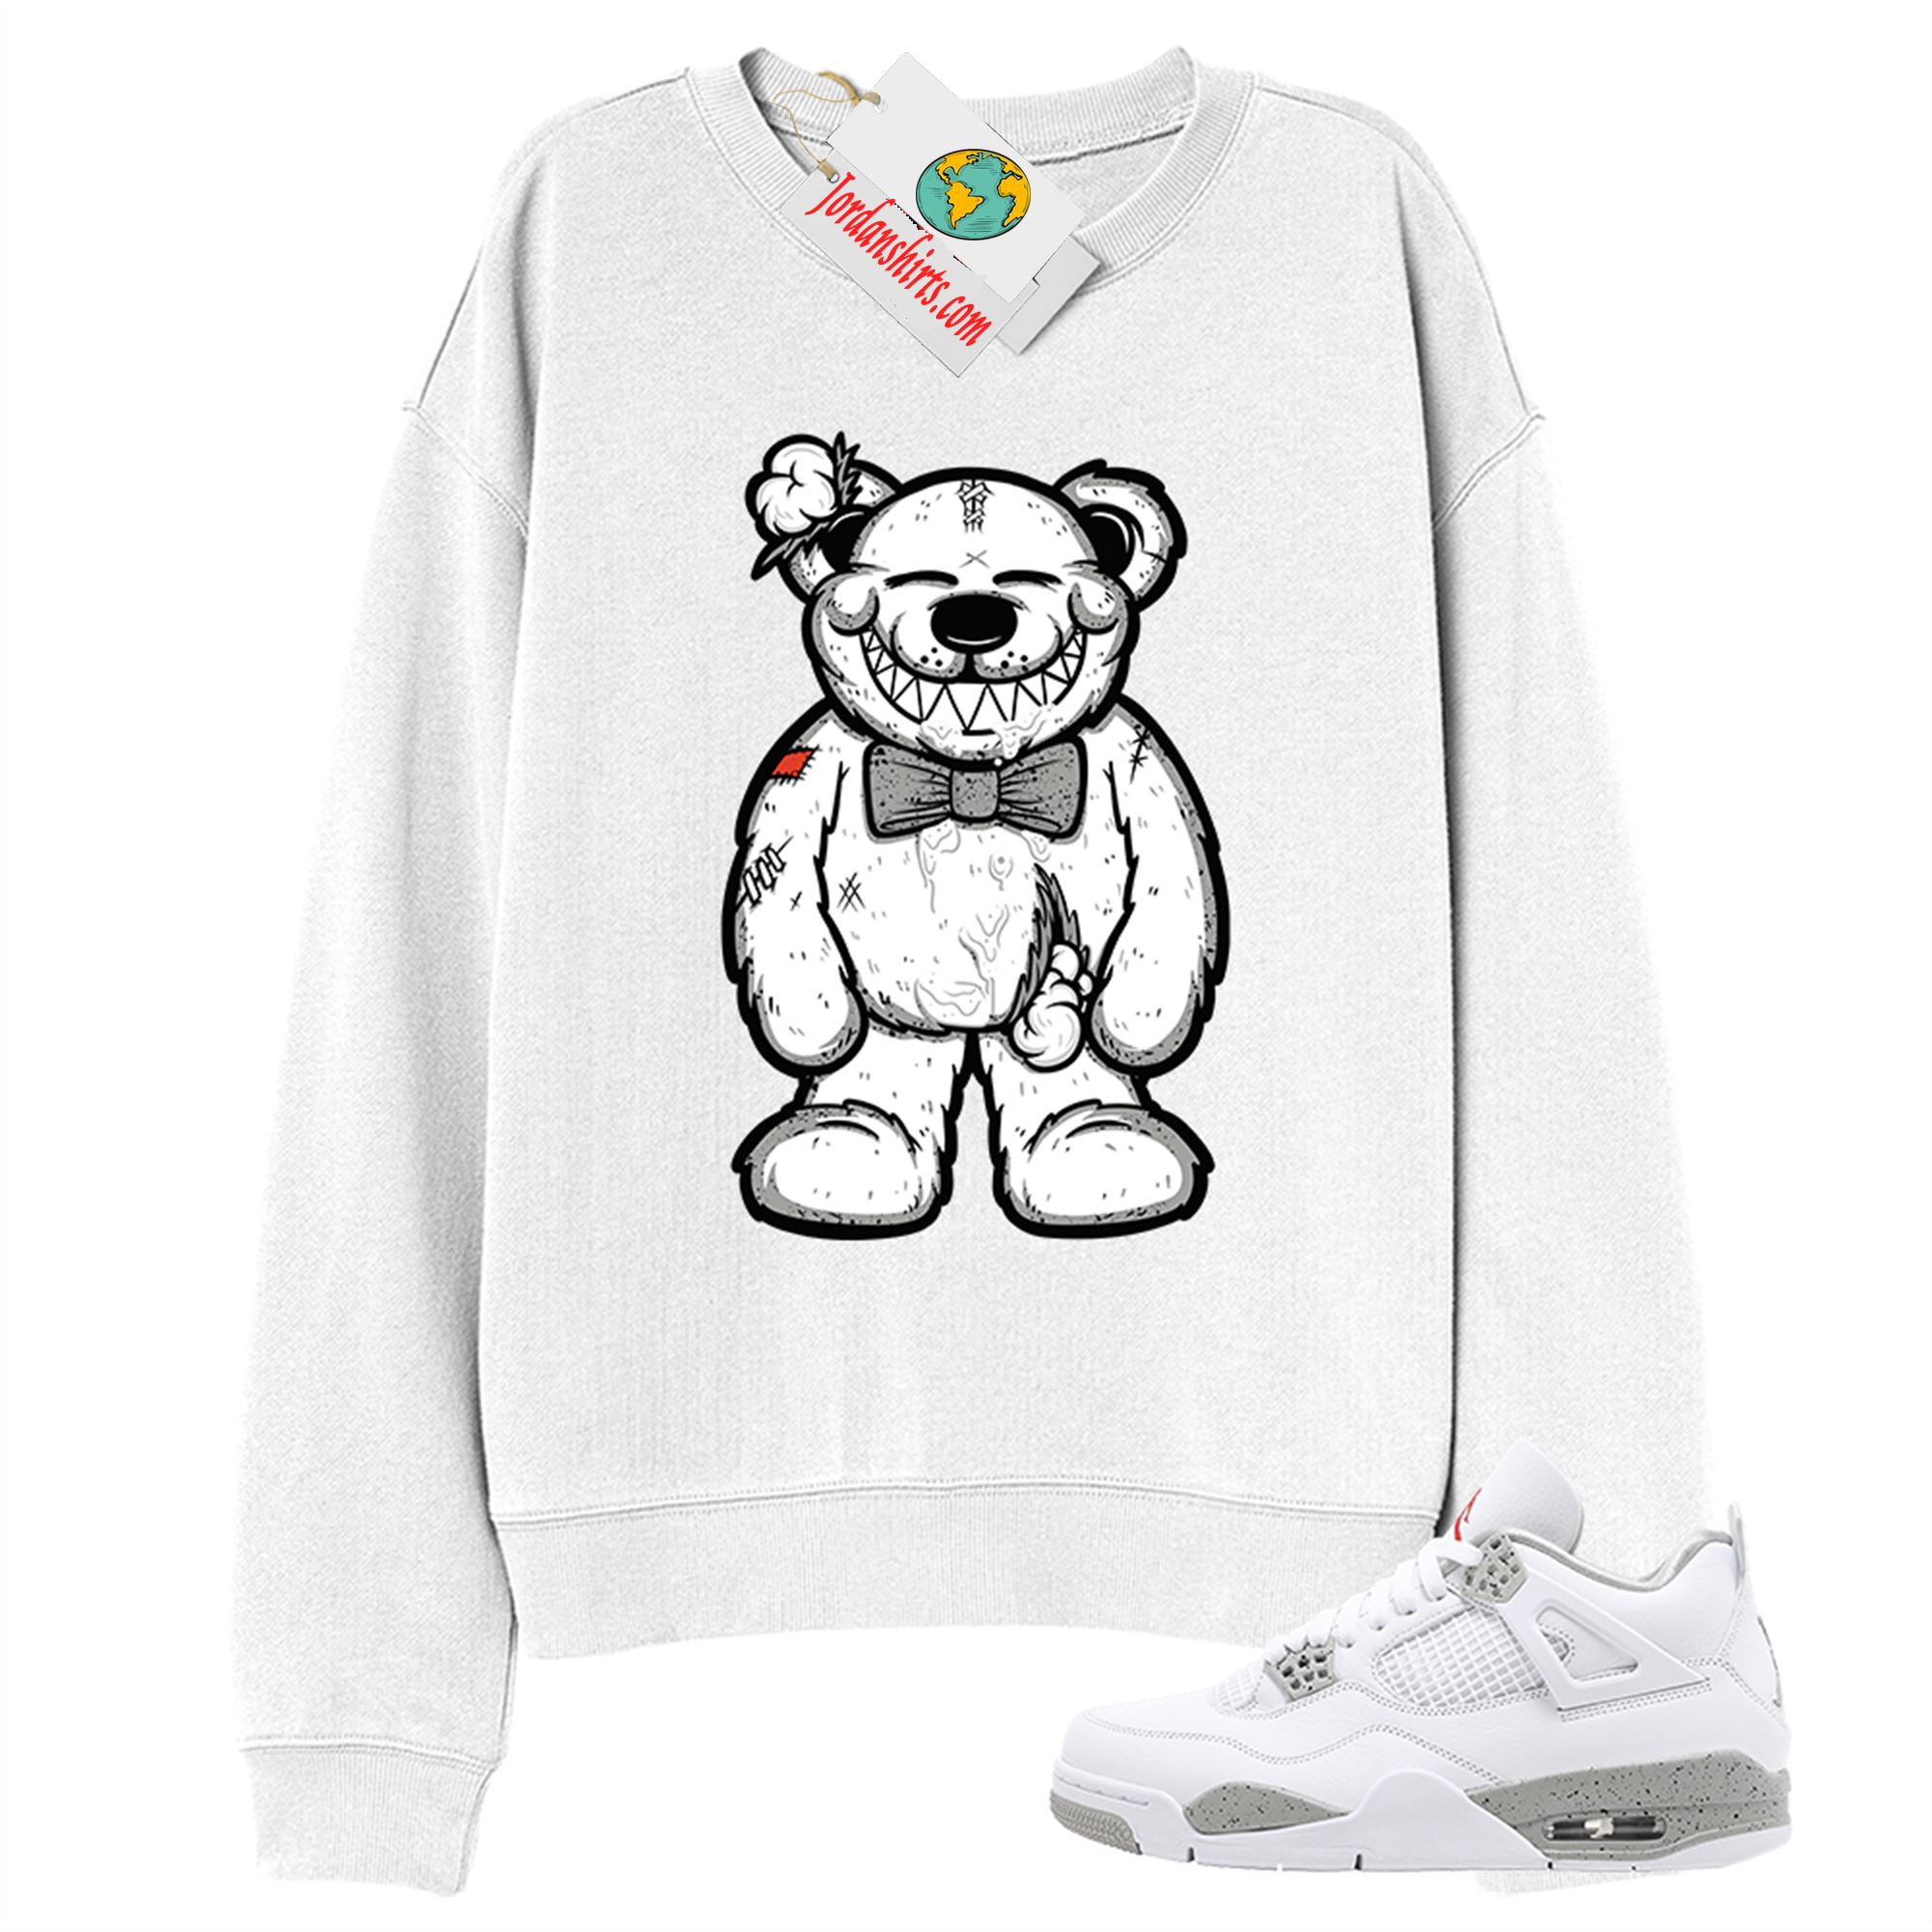 Jordan 4 Sweatshirt, Teddy Bear Smile White Sweatshirt Air Jordan 4 White Oreo 4s Full Size Up To 5xl